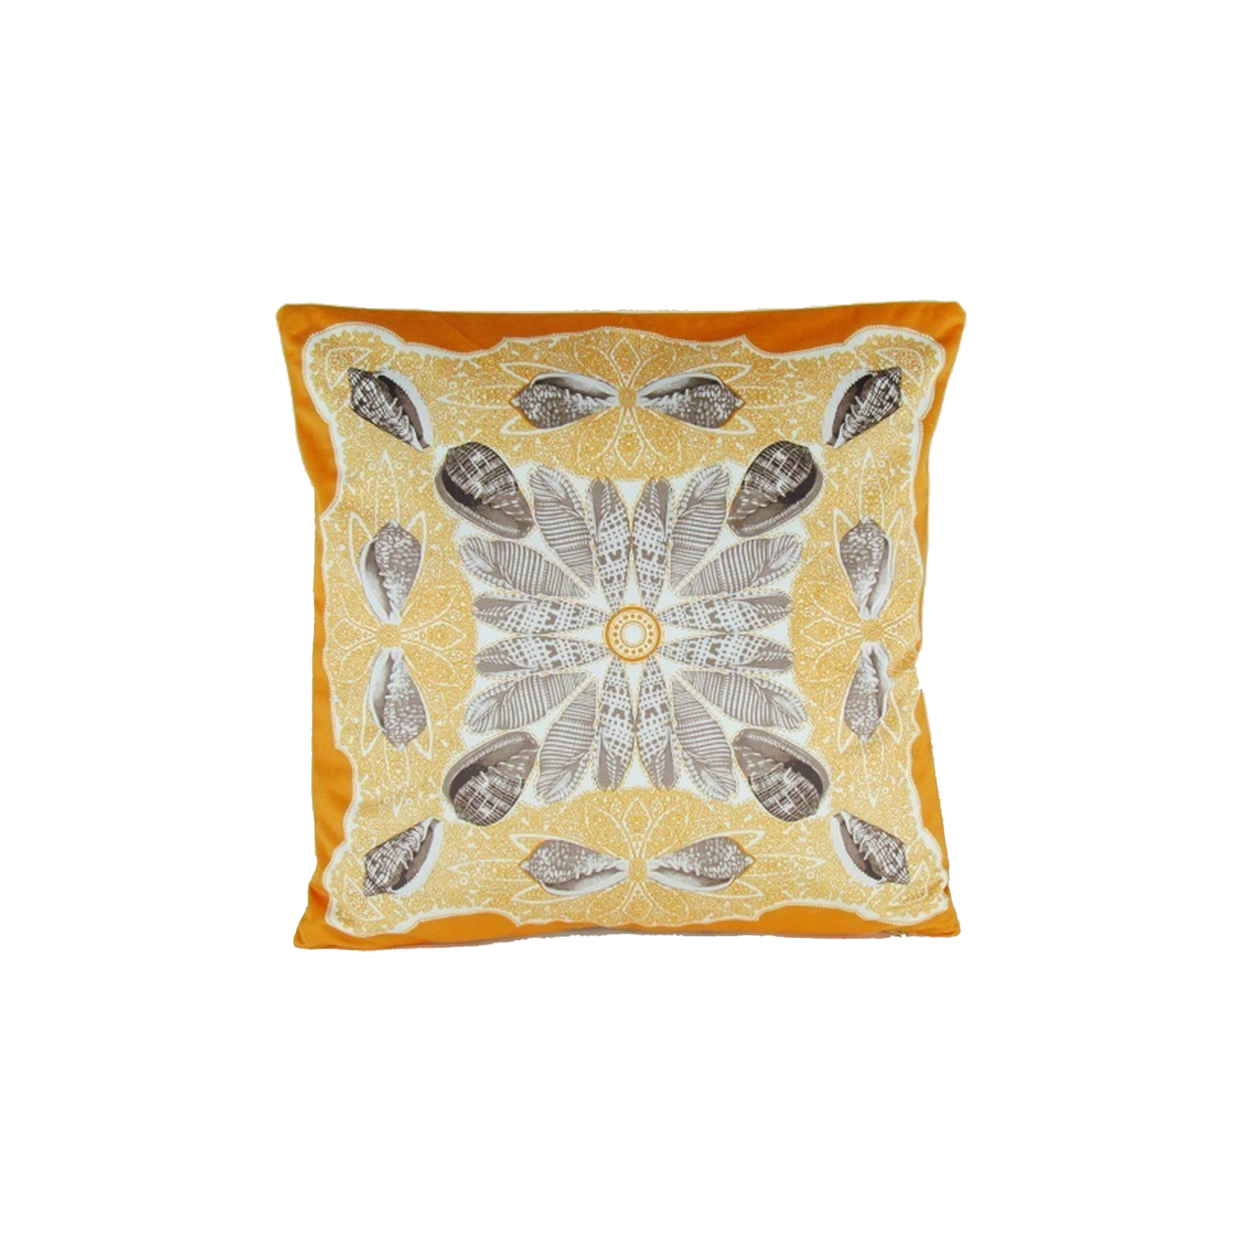 Floral Pattern Square Fabric Pillow, Orange And Gray- Saltoro Sherpi